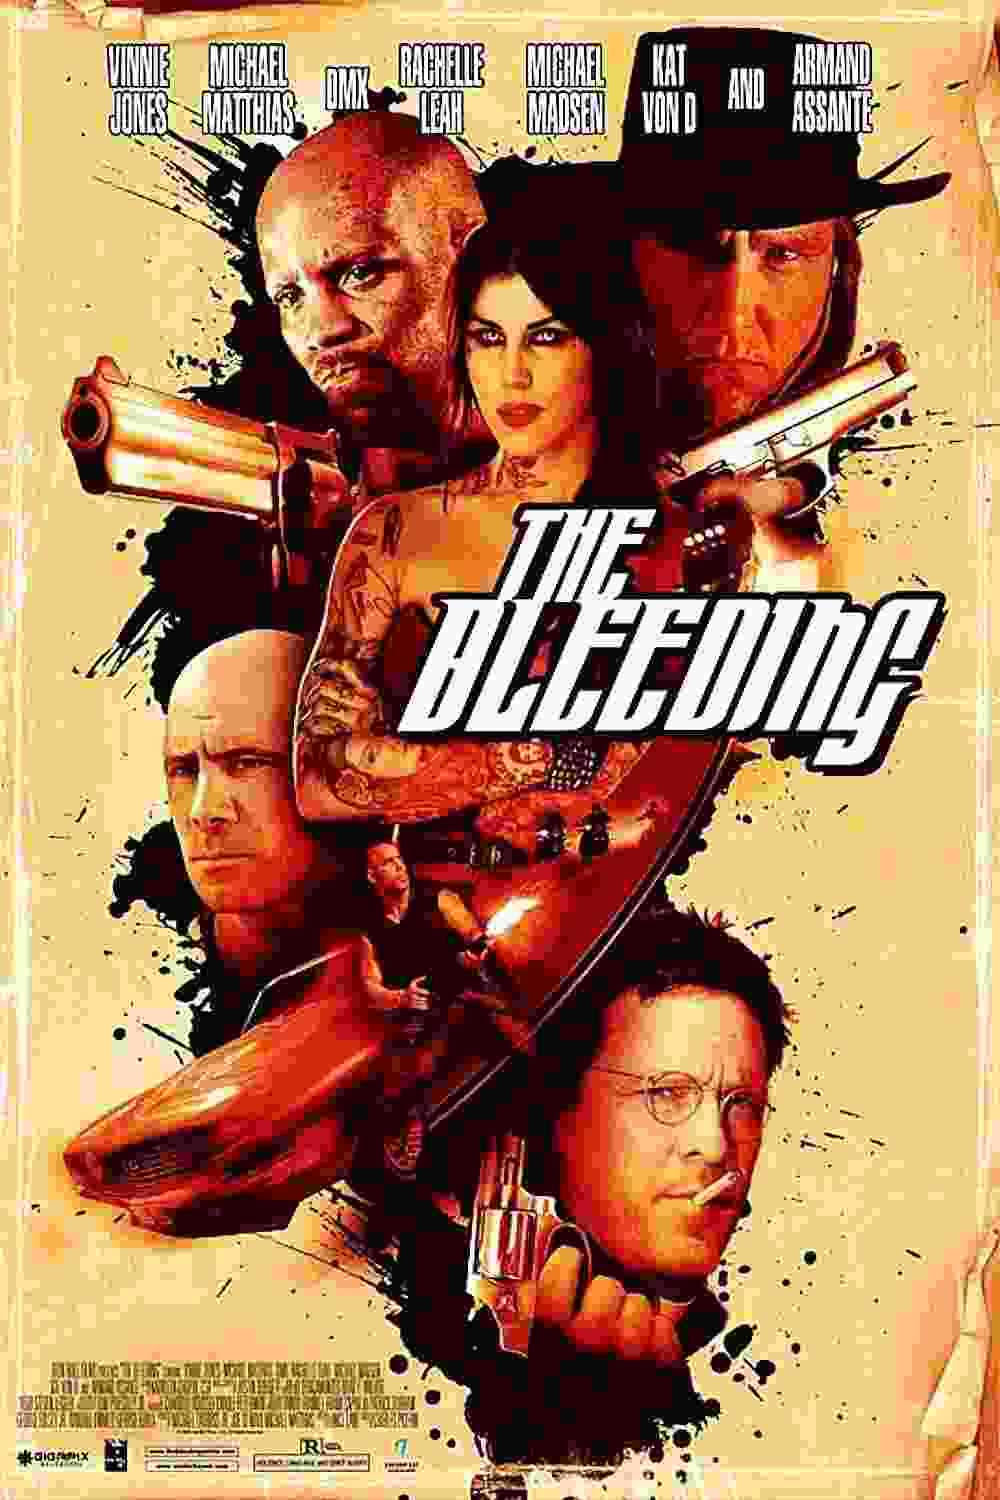 The Bleeding (2009) Michael Matthias